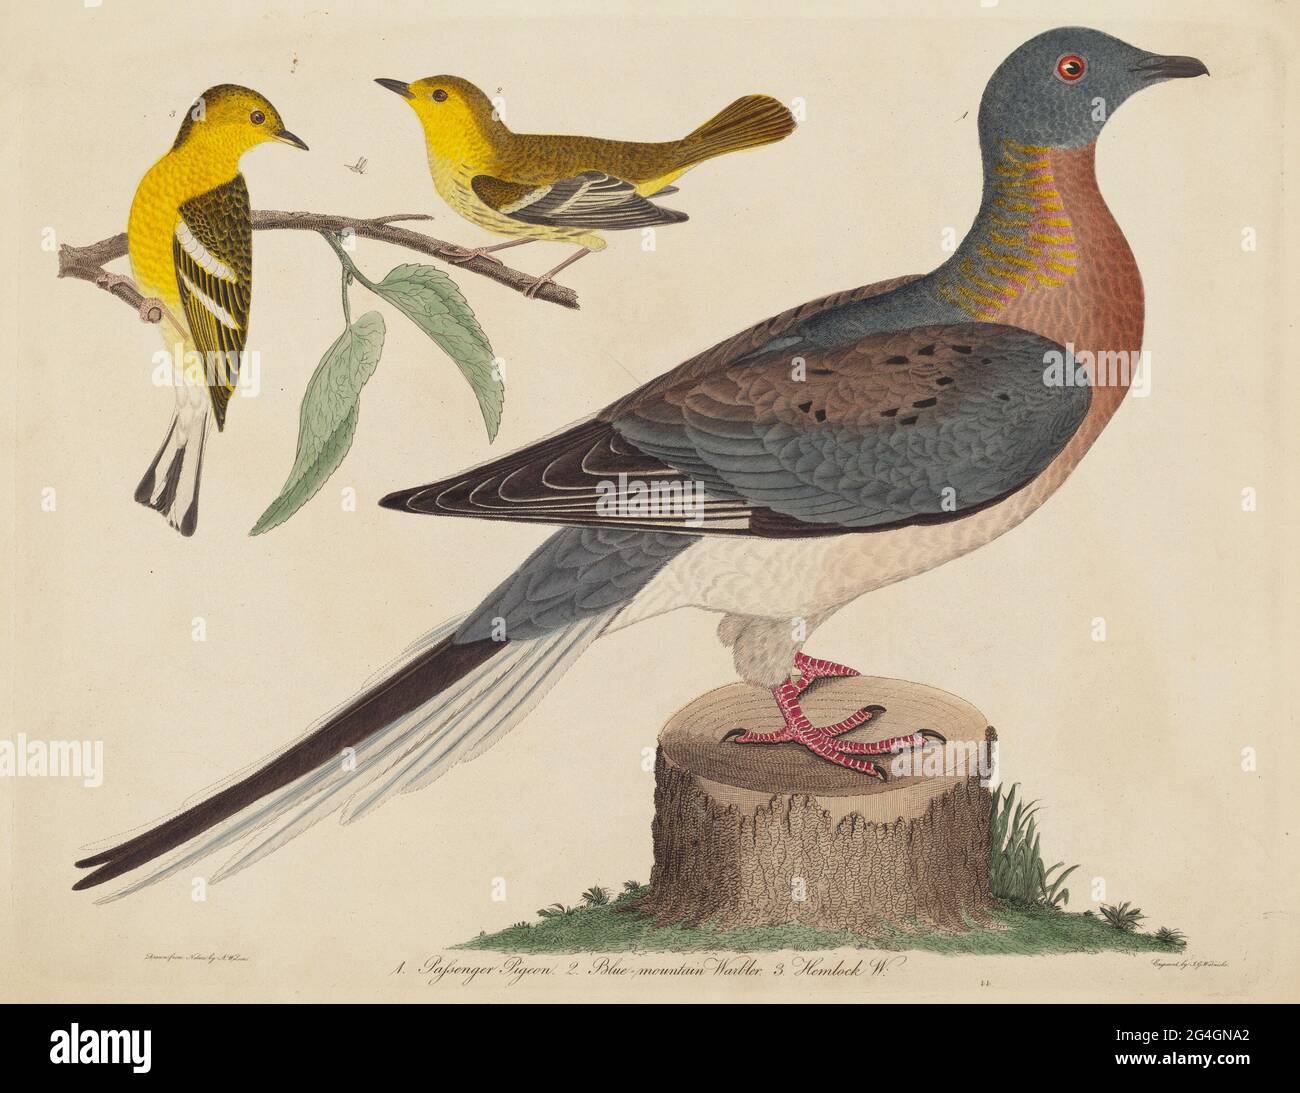 Passenger Pigeon, Blue-mountain Warbler, and Hemlock Warbler, published 1808-1814. Stock Photo